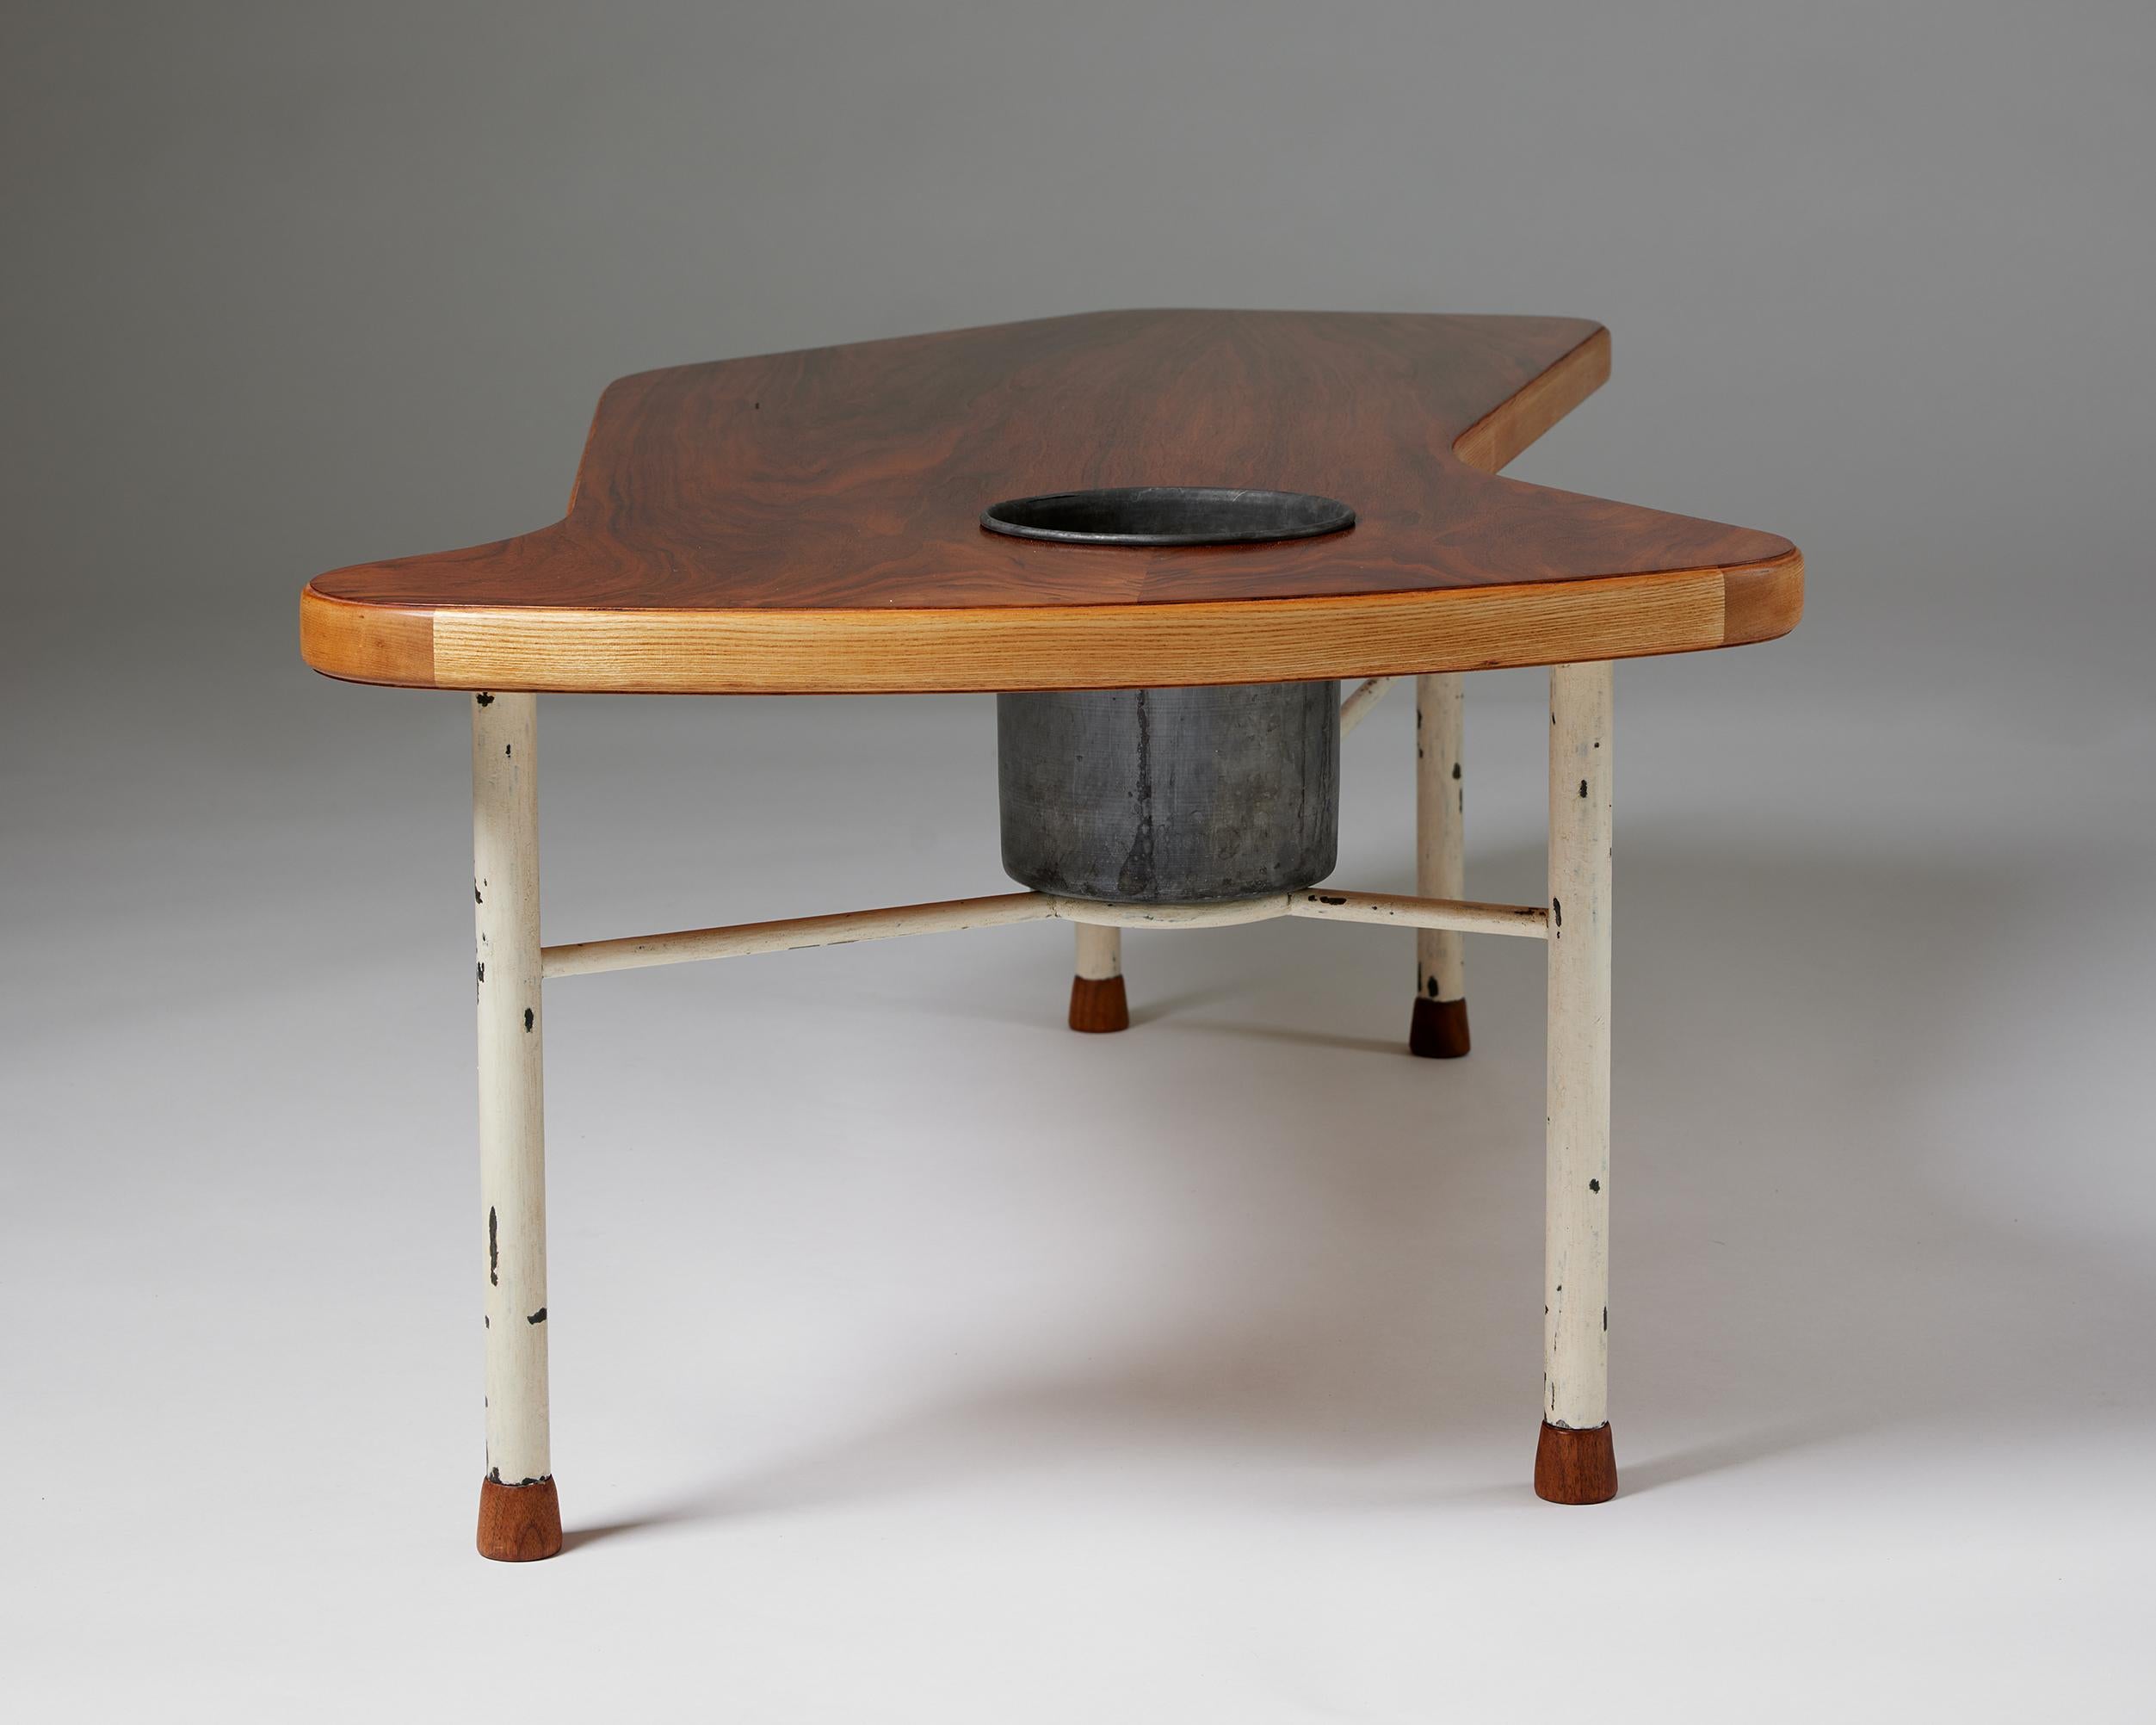 20th Century Rare Coffee Table Designed by Finn Juhl for Niels Vodder, Denmark, 1941 For Sale